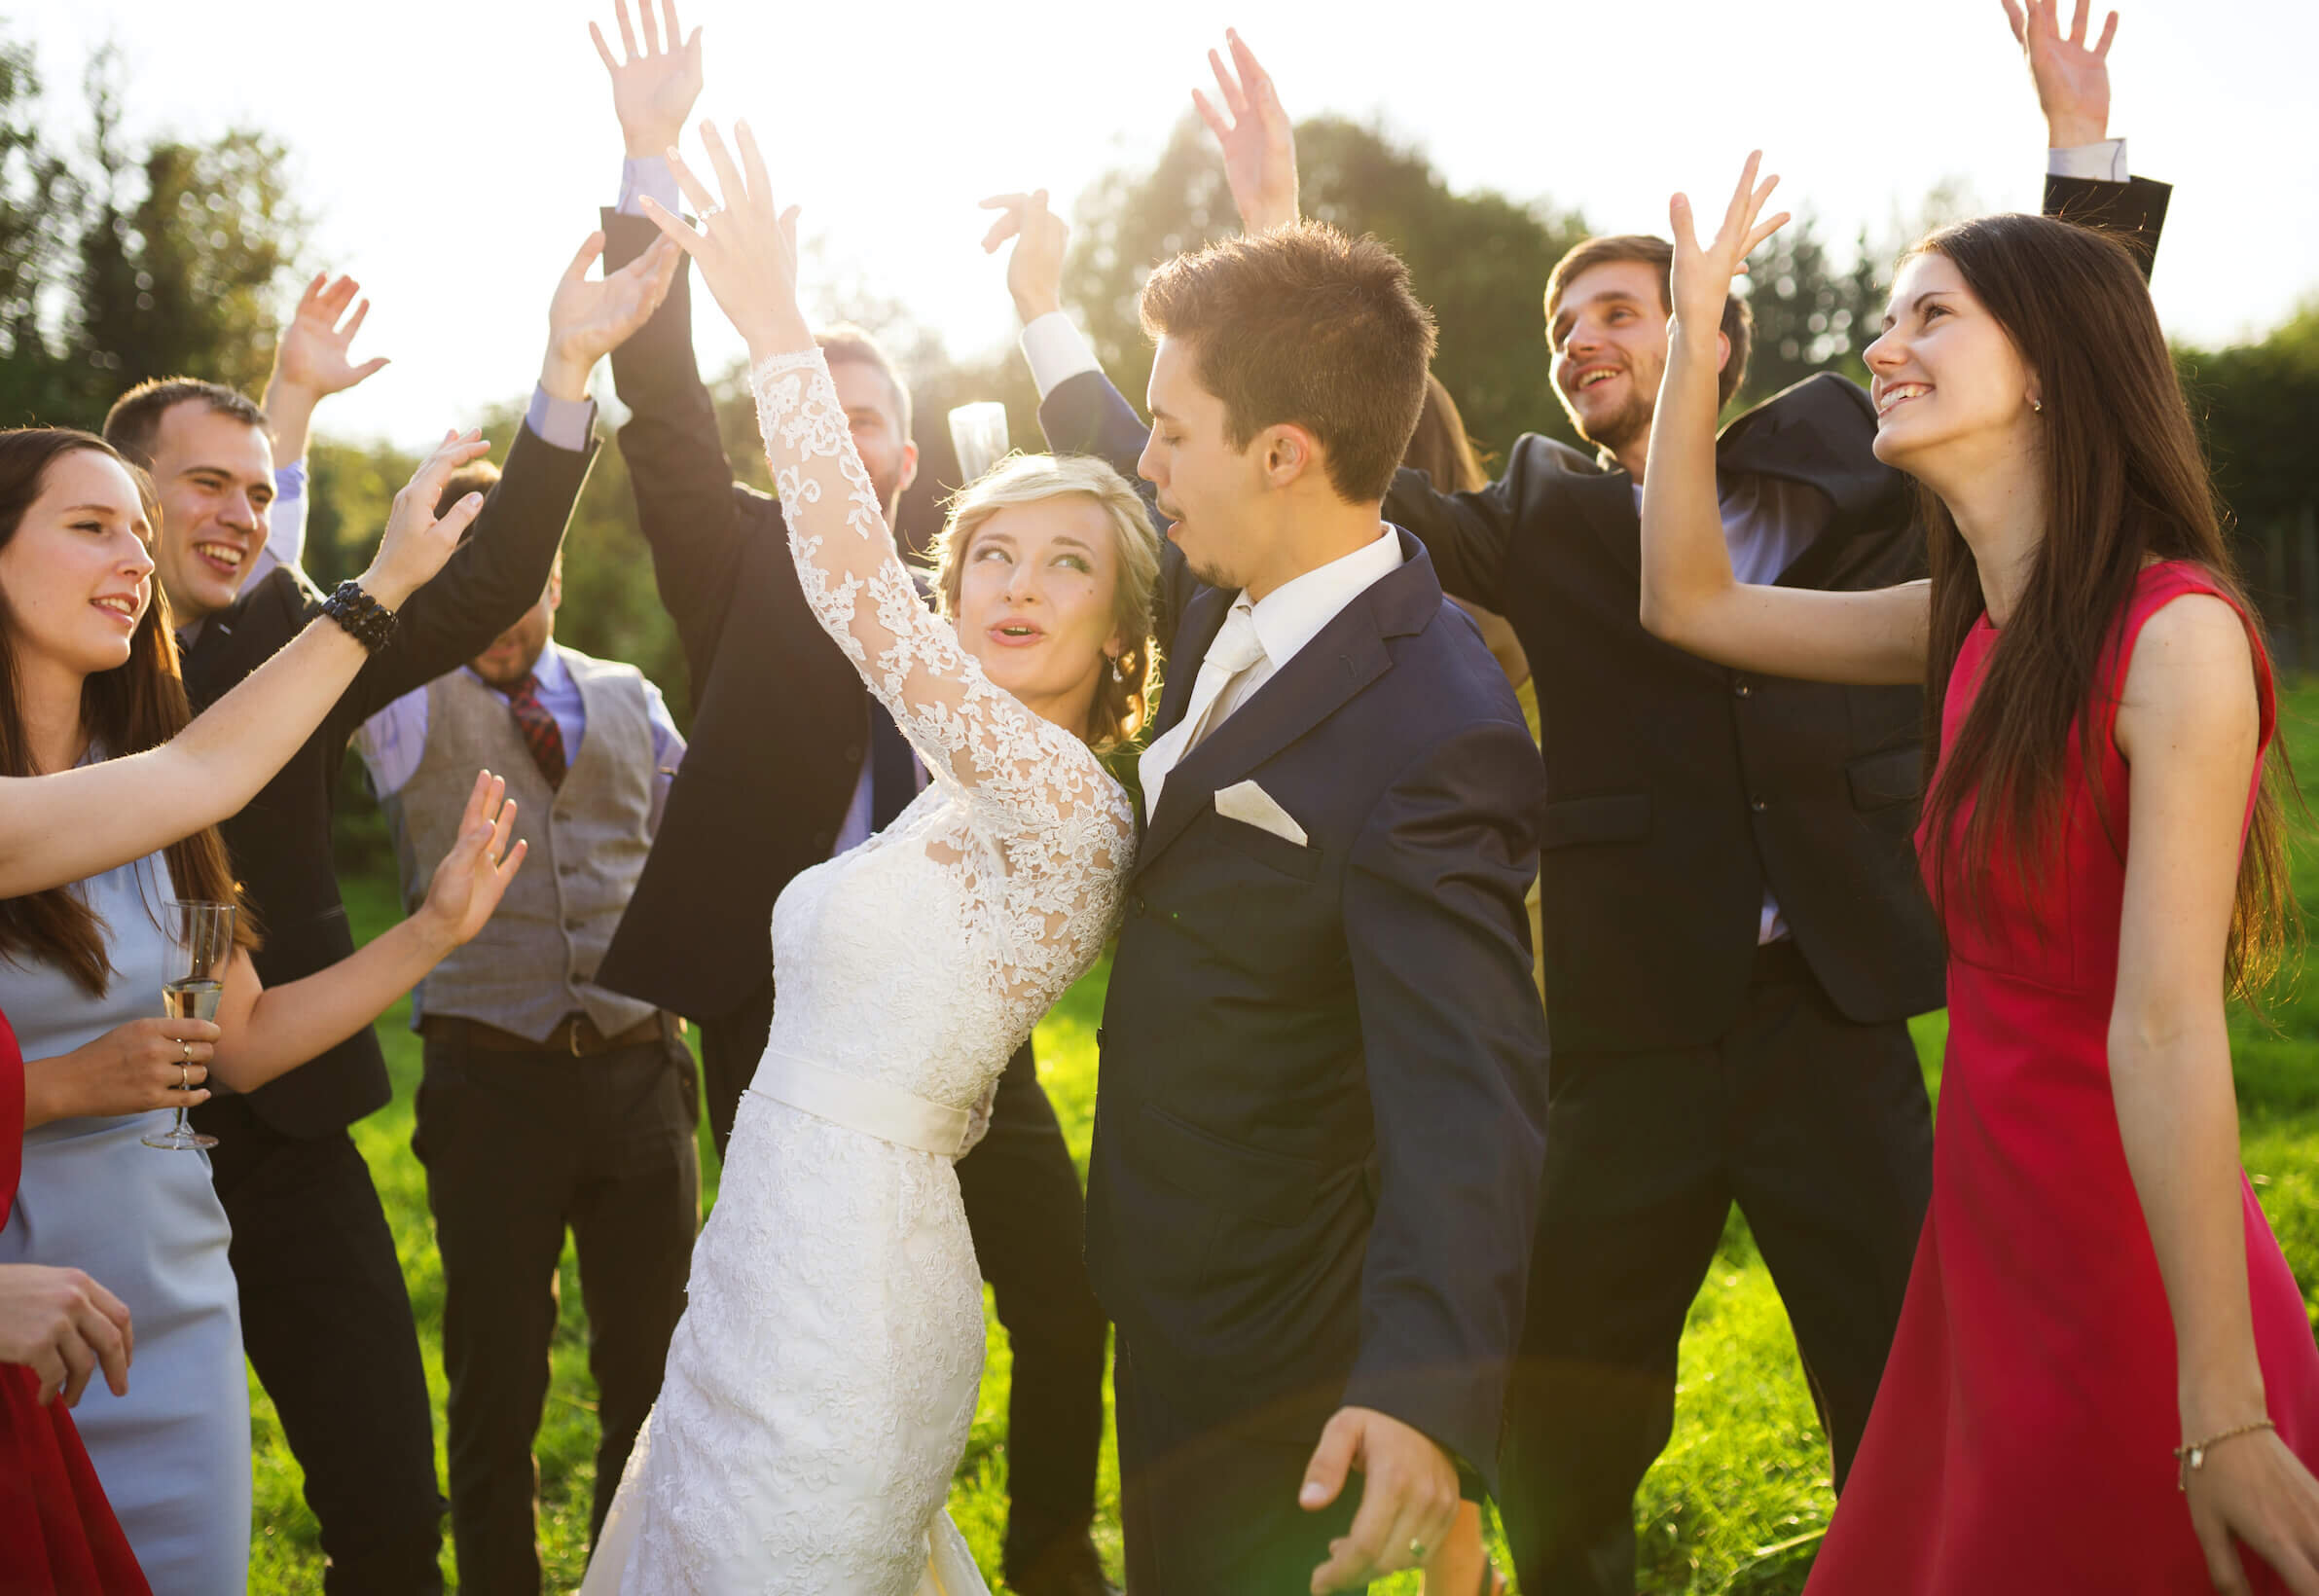 Most Fun Wedding Songs for 2022: 127 Options | Wedding Spot Blog